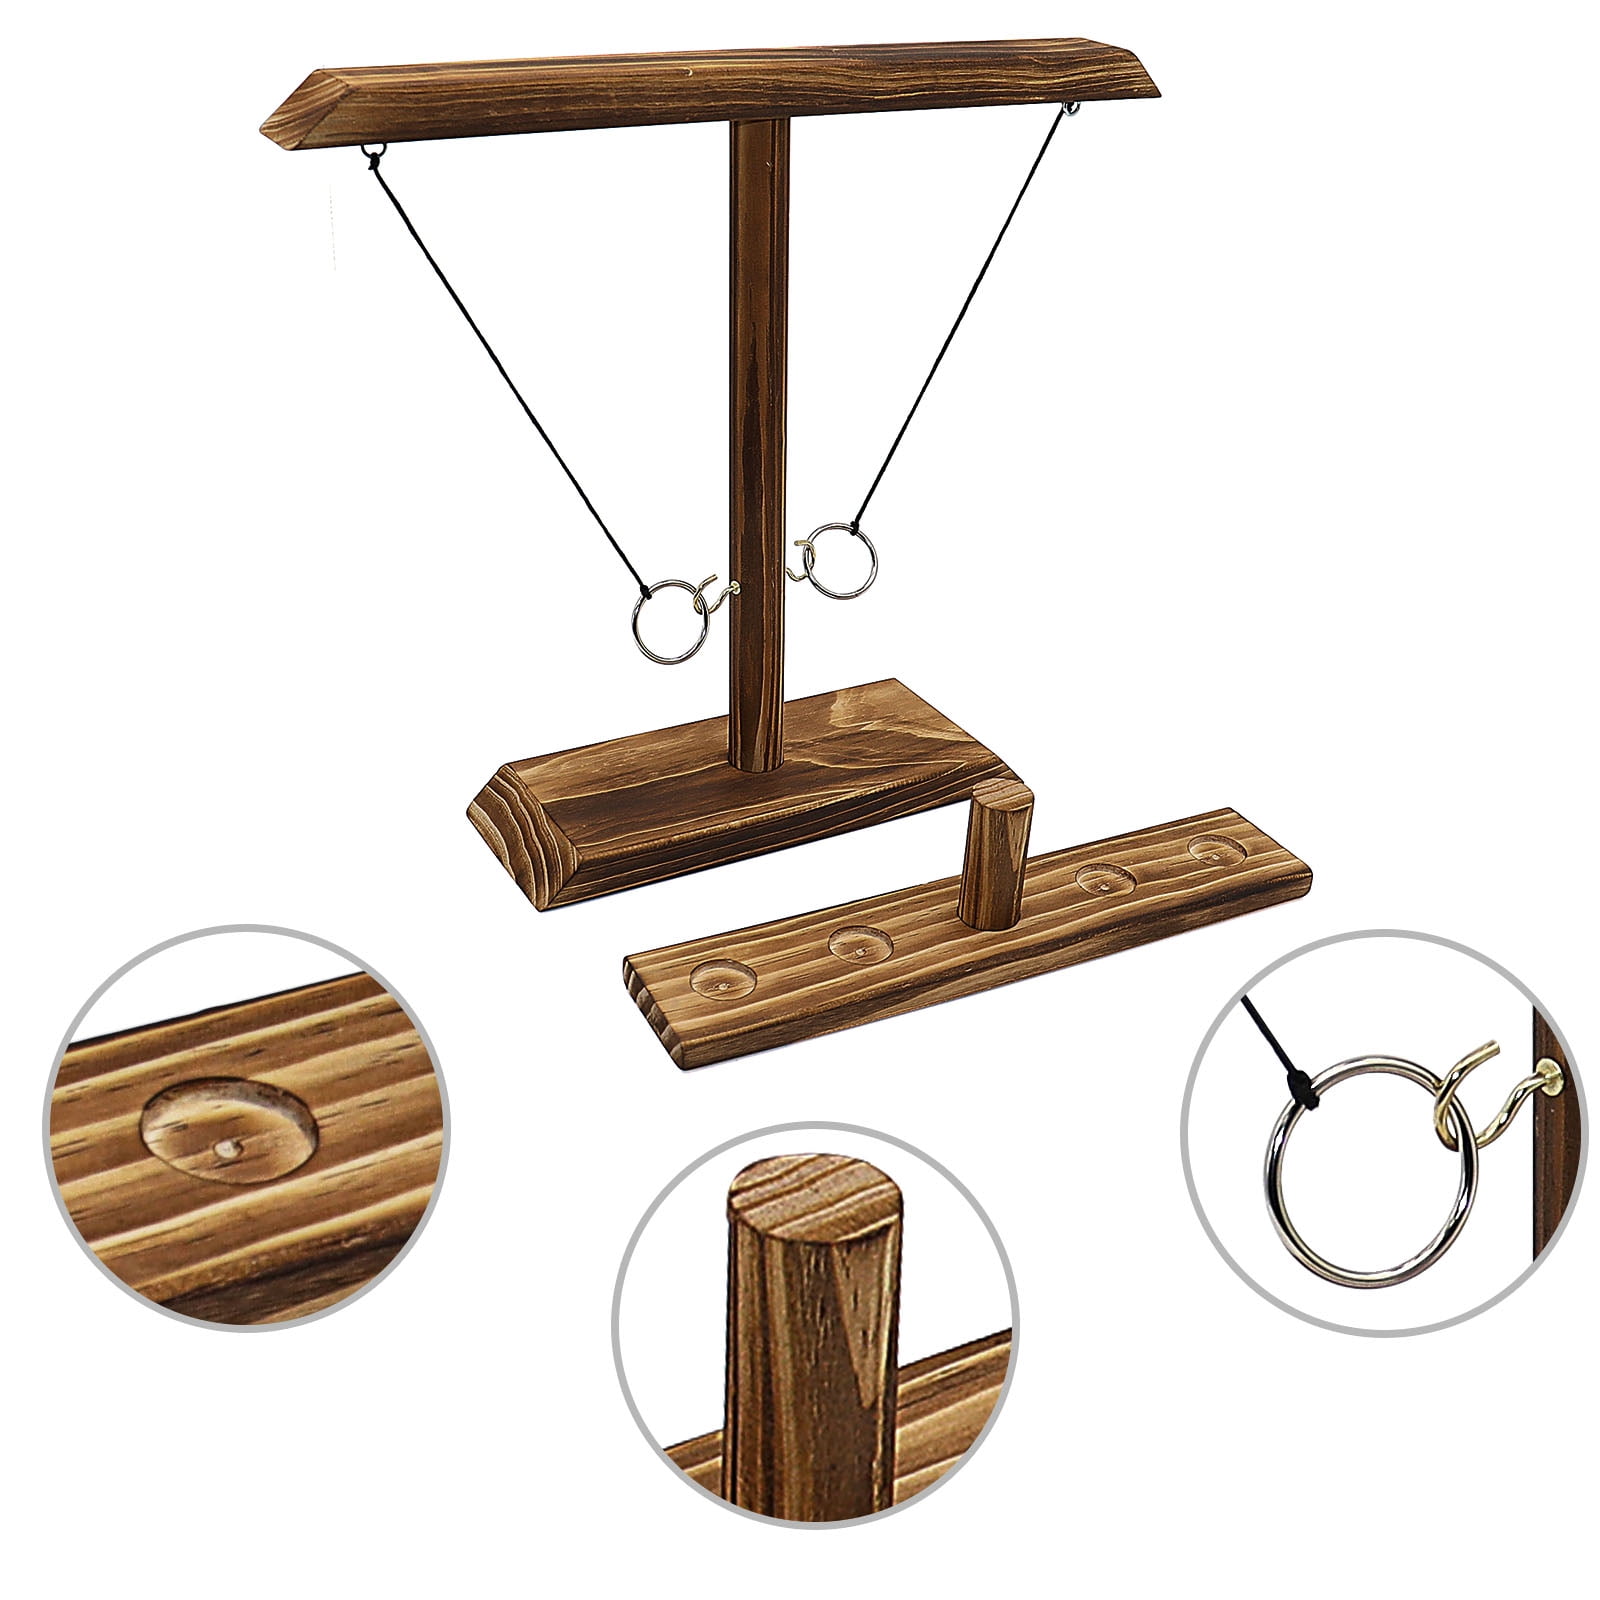 Details about   Ring Toss with Shot Ladder Bundle Game Handmade Wooden Hook Battle Outdoor USA 